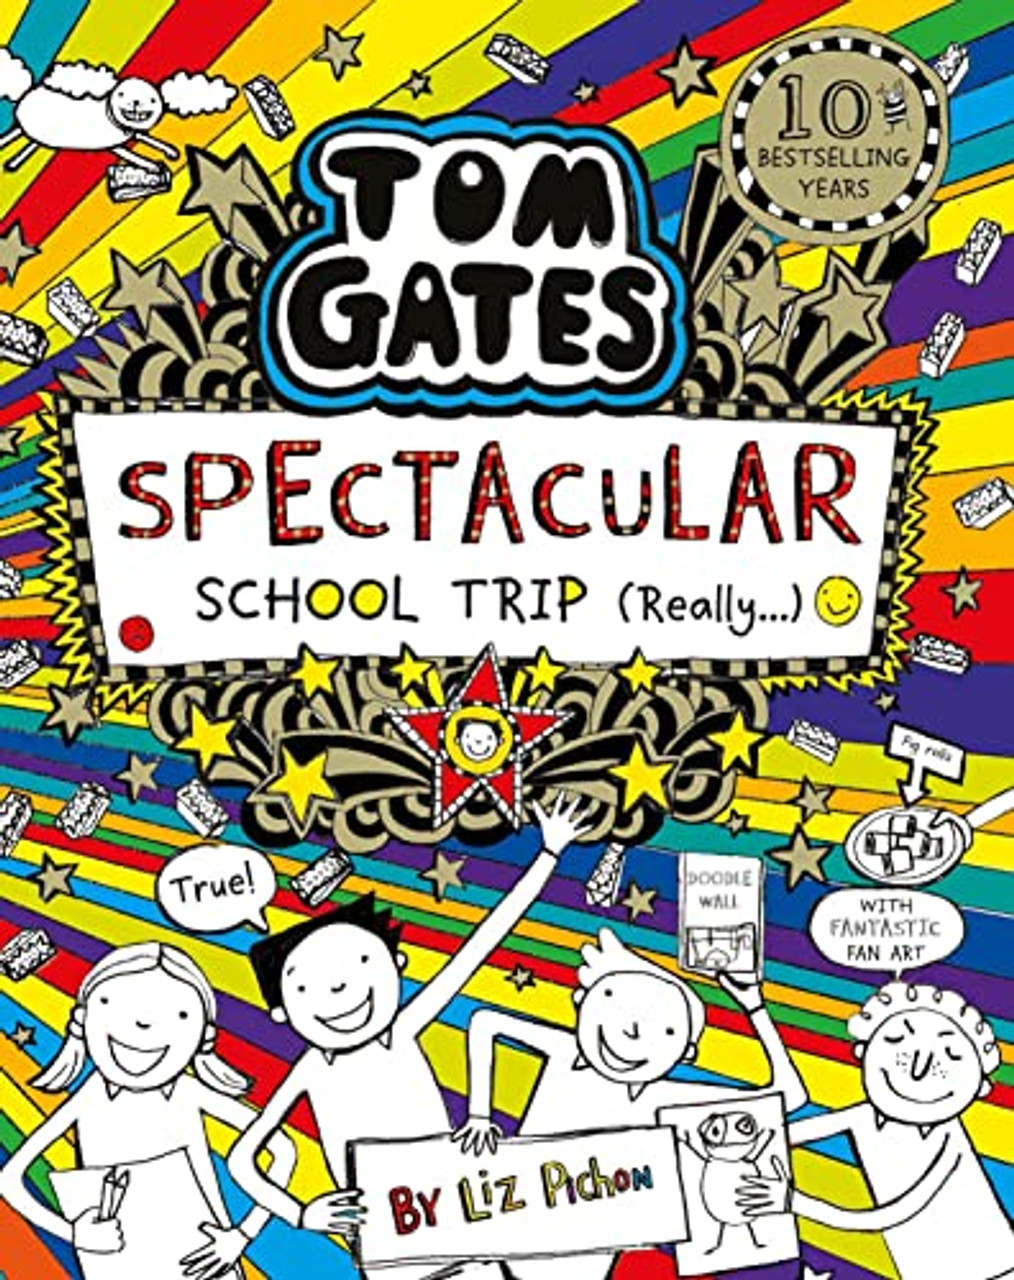 Liz Pichon / Spectacular School Trip (Really...) (Large Paperback)